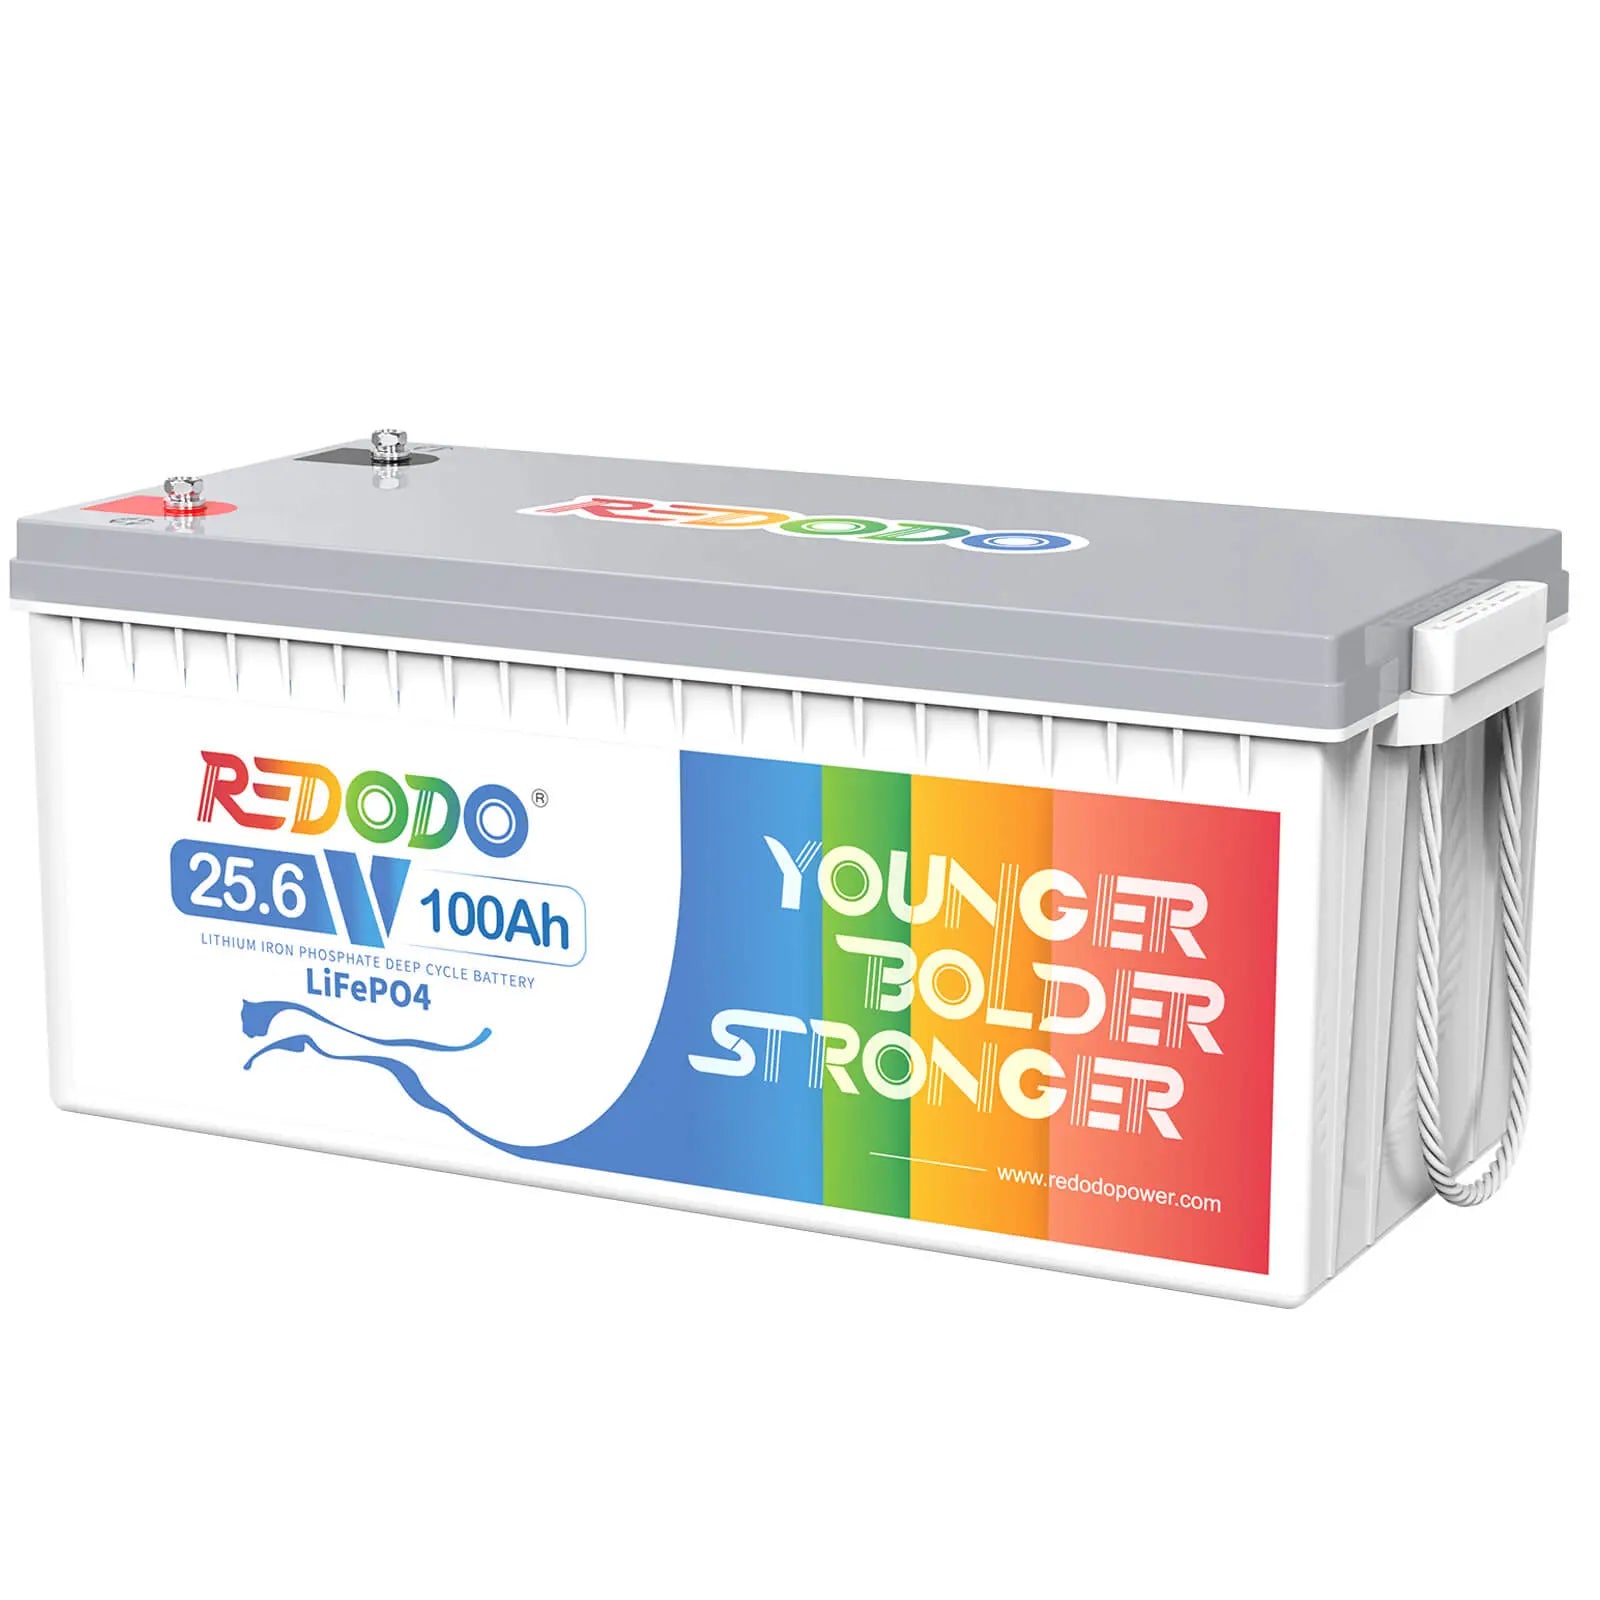 Redodo 24V 100Ah LiFePO4 Batterie, mit Max. 2560W Leistung